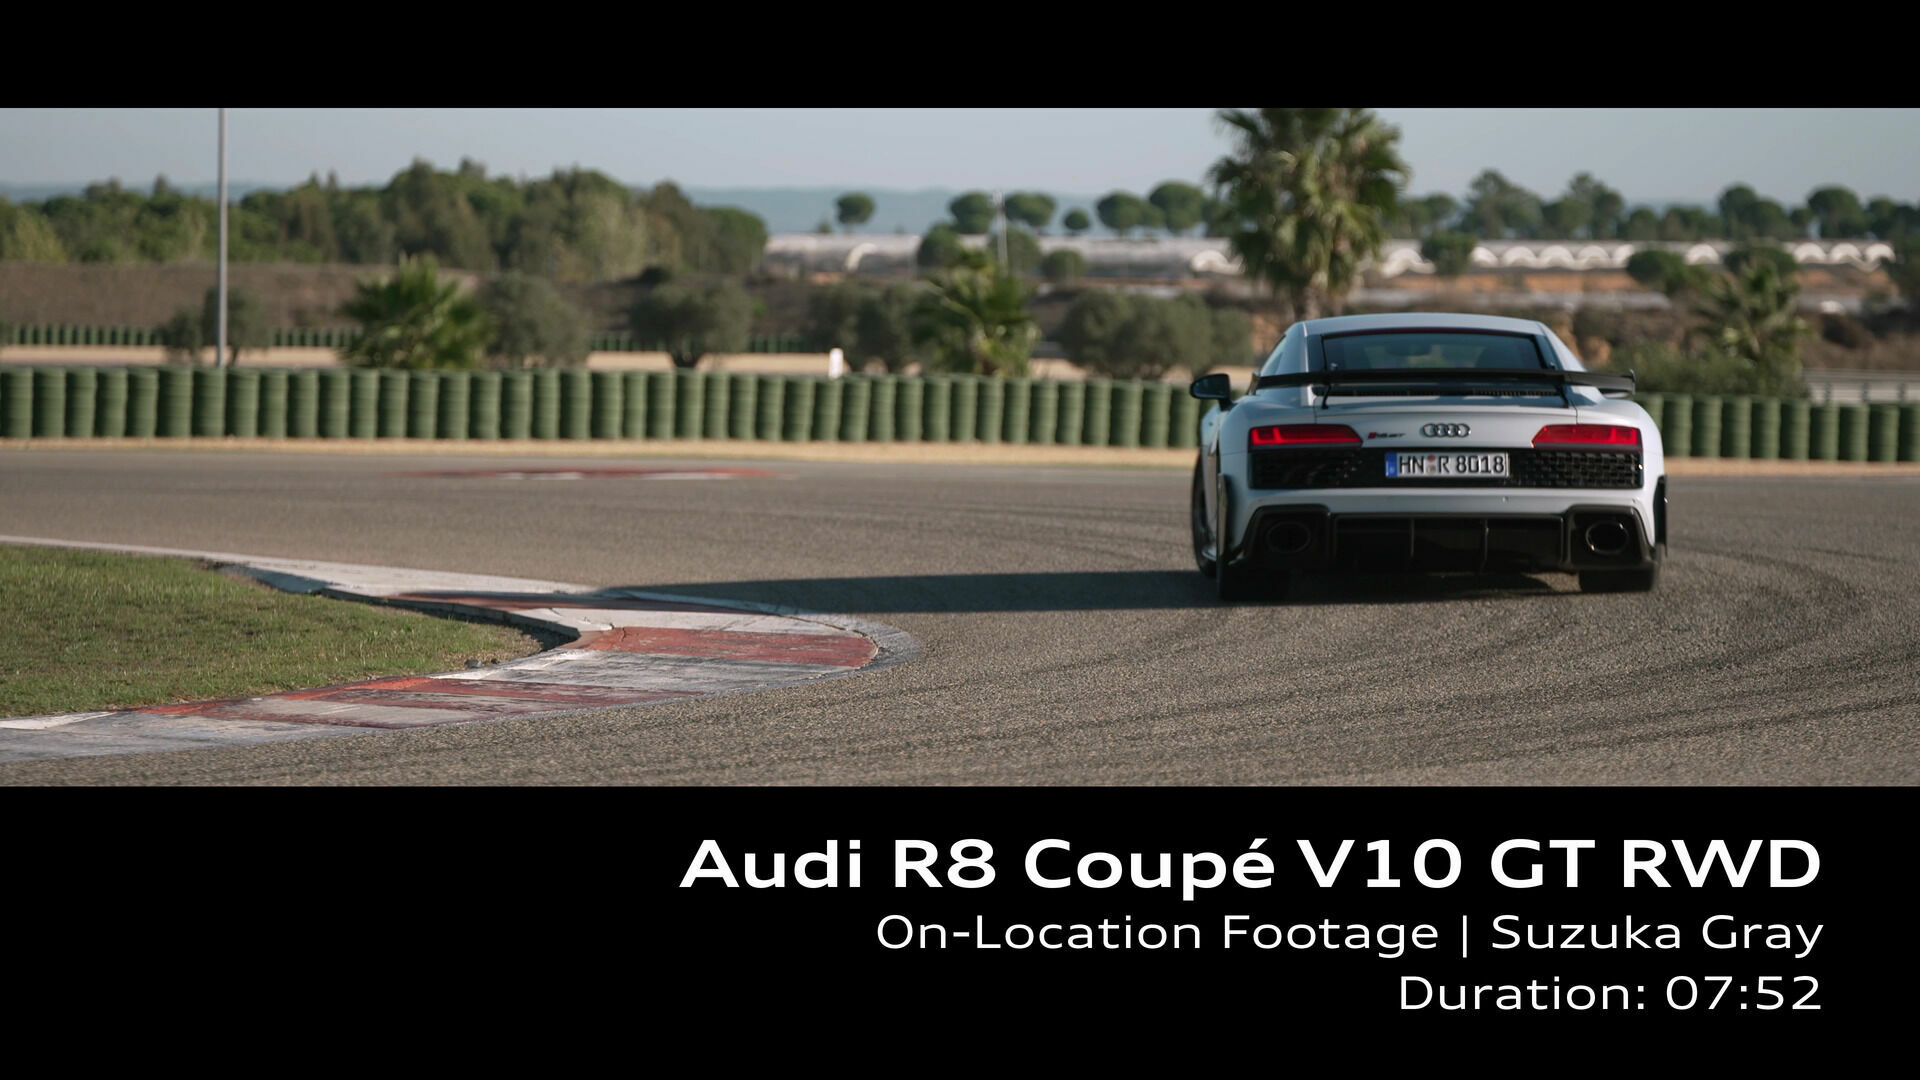 Footage: Audi R8 Coupé V10 GT RWD Suzuka Gray